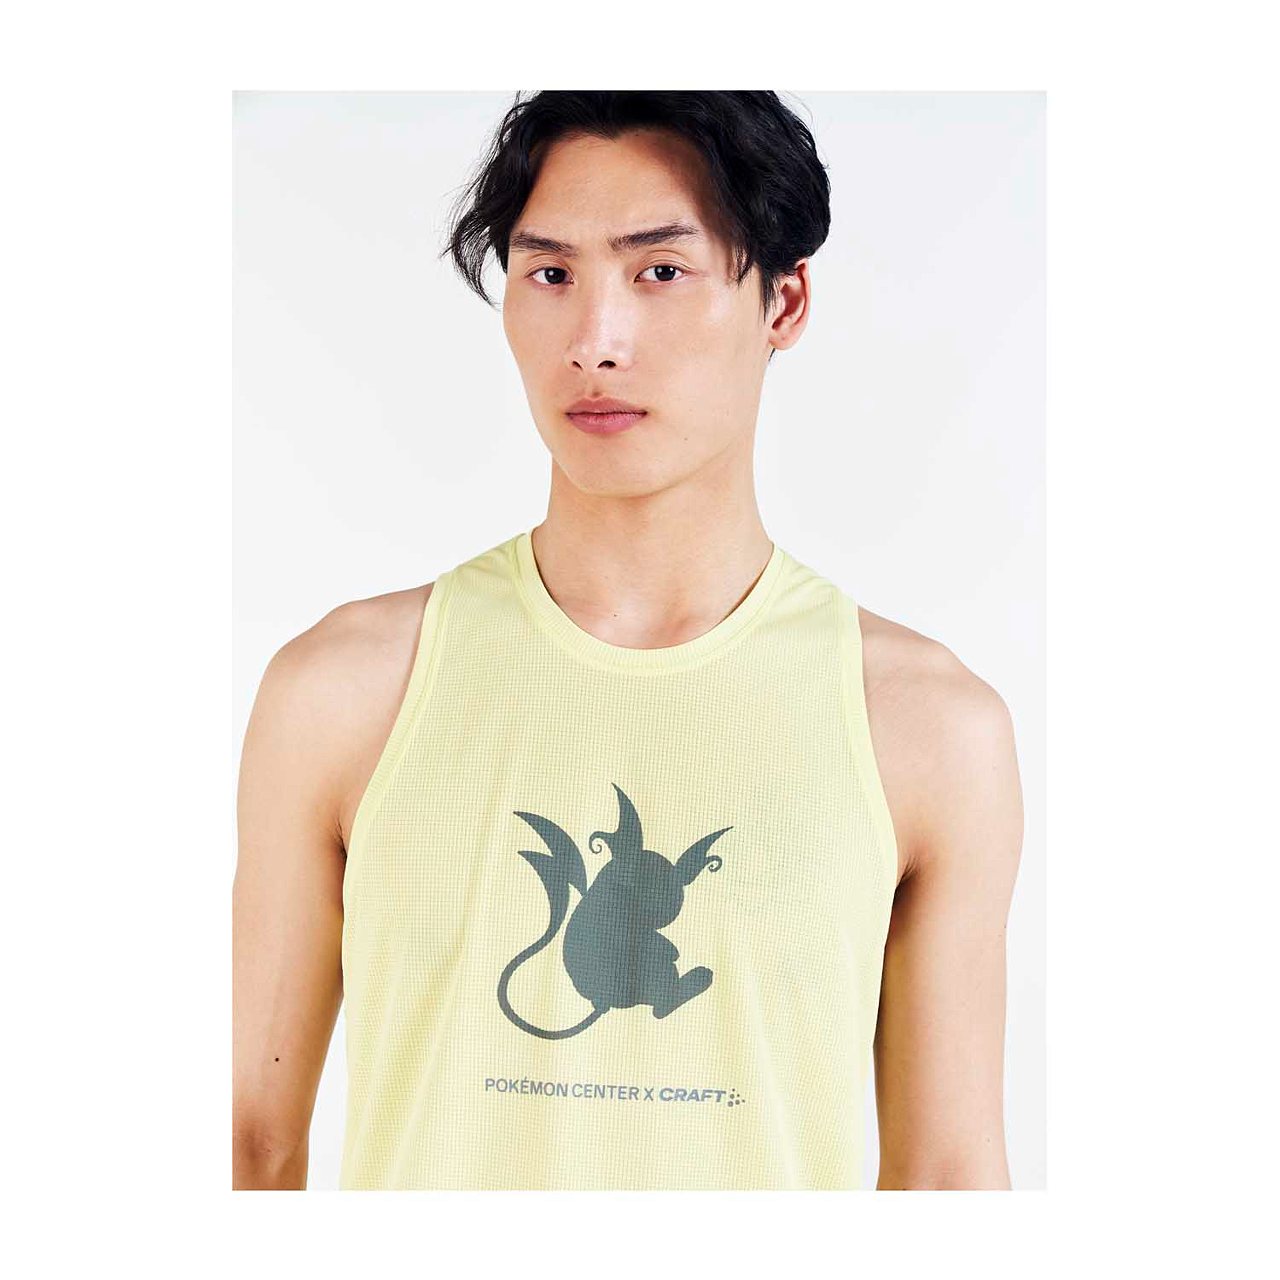 Pokémon Center x Craft Sportswear Line Available Now